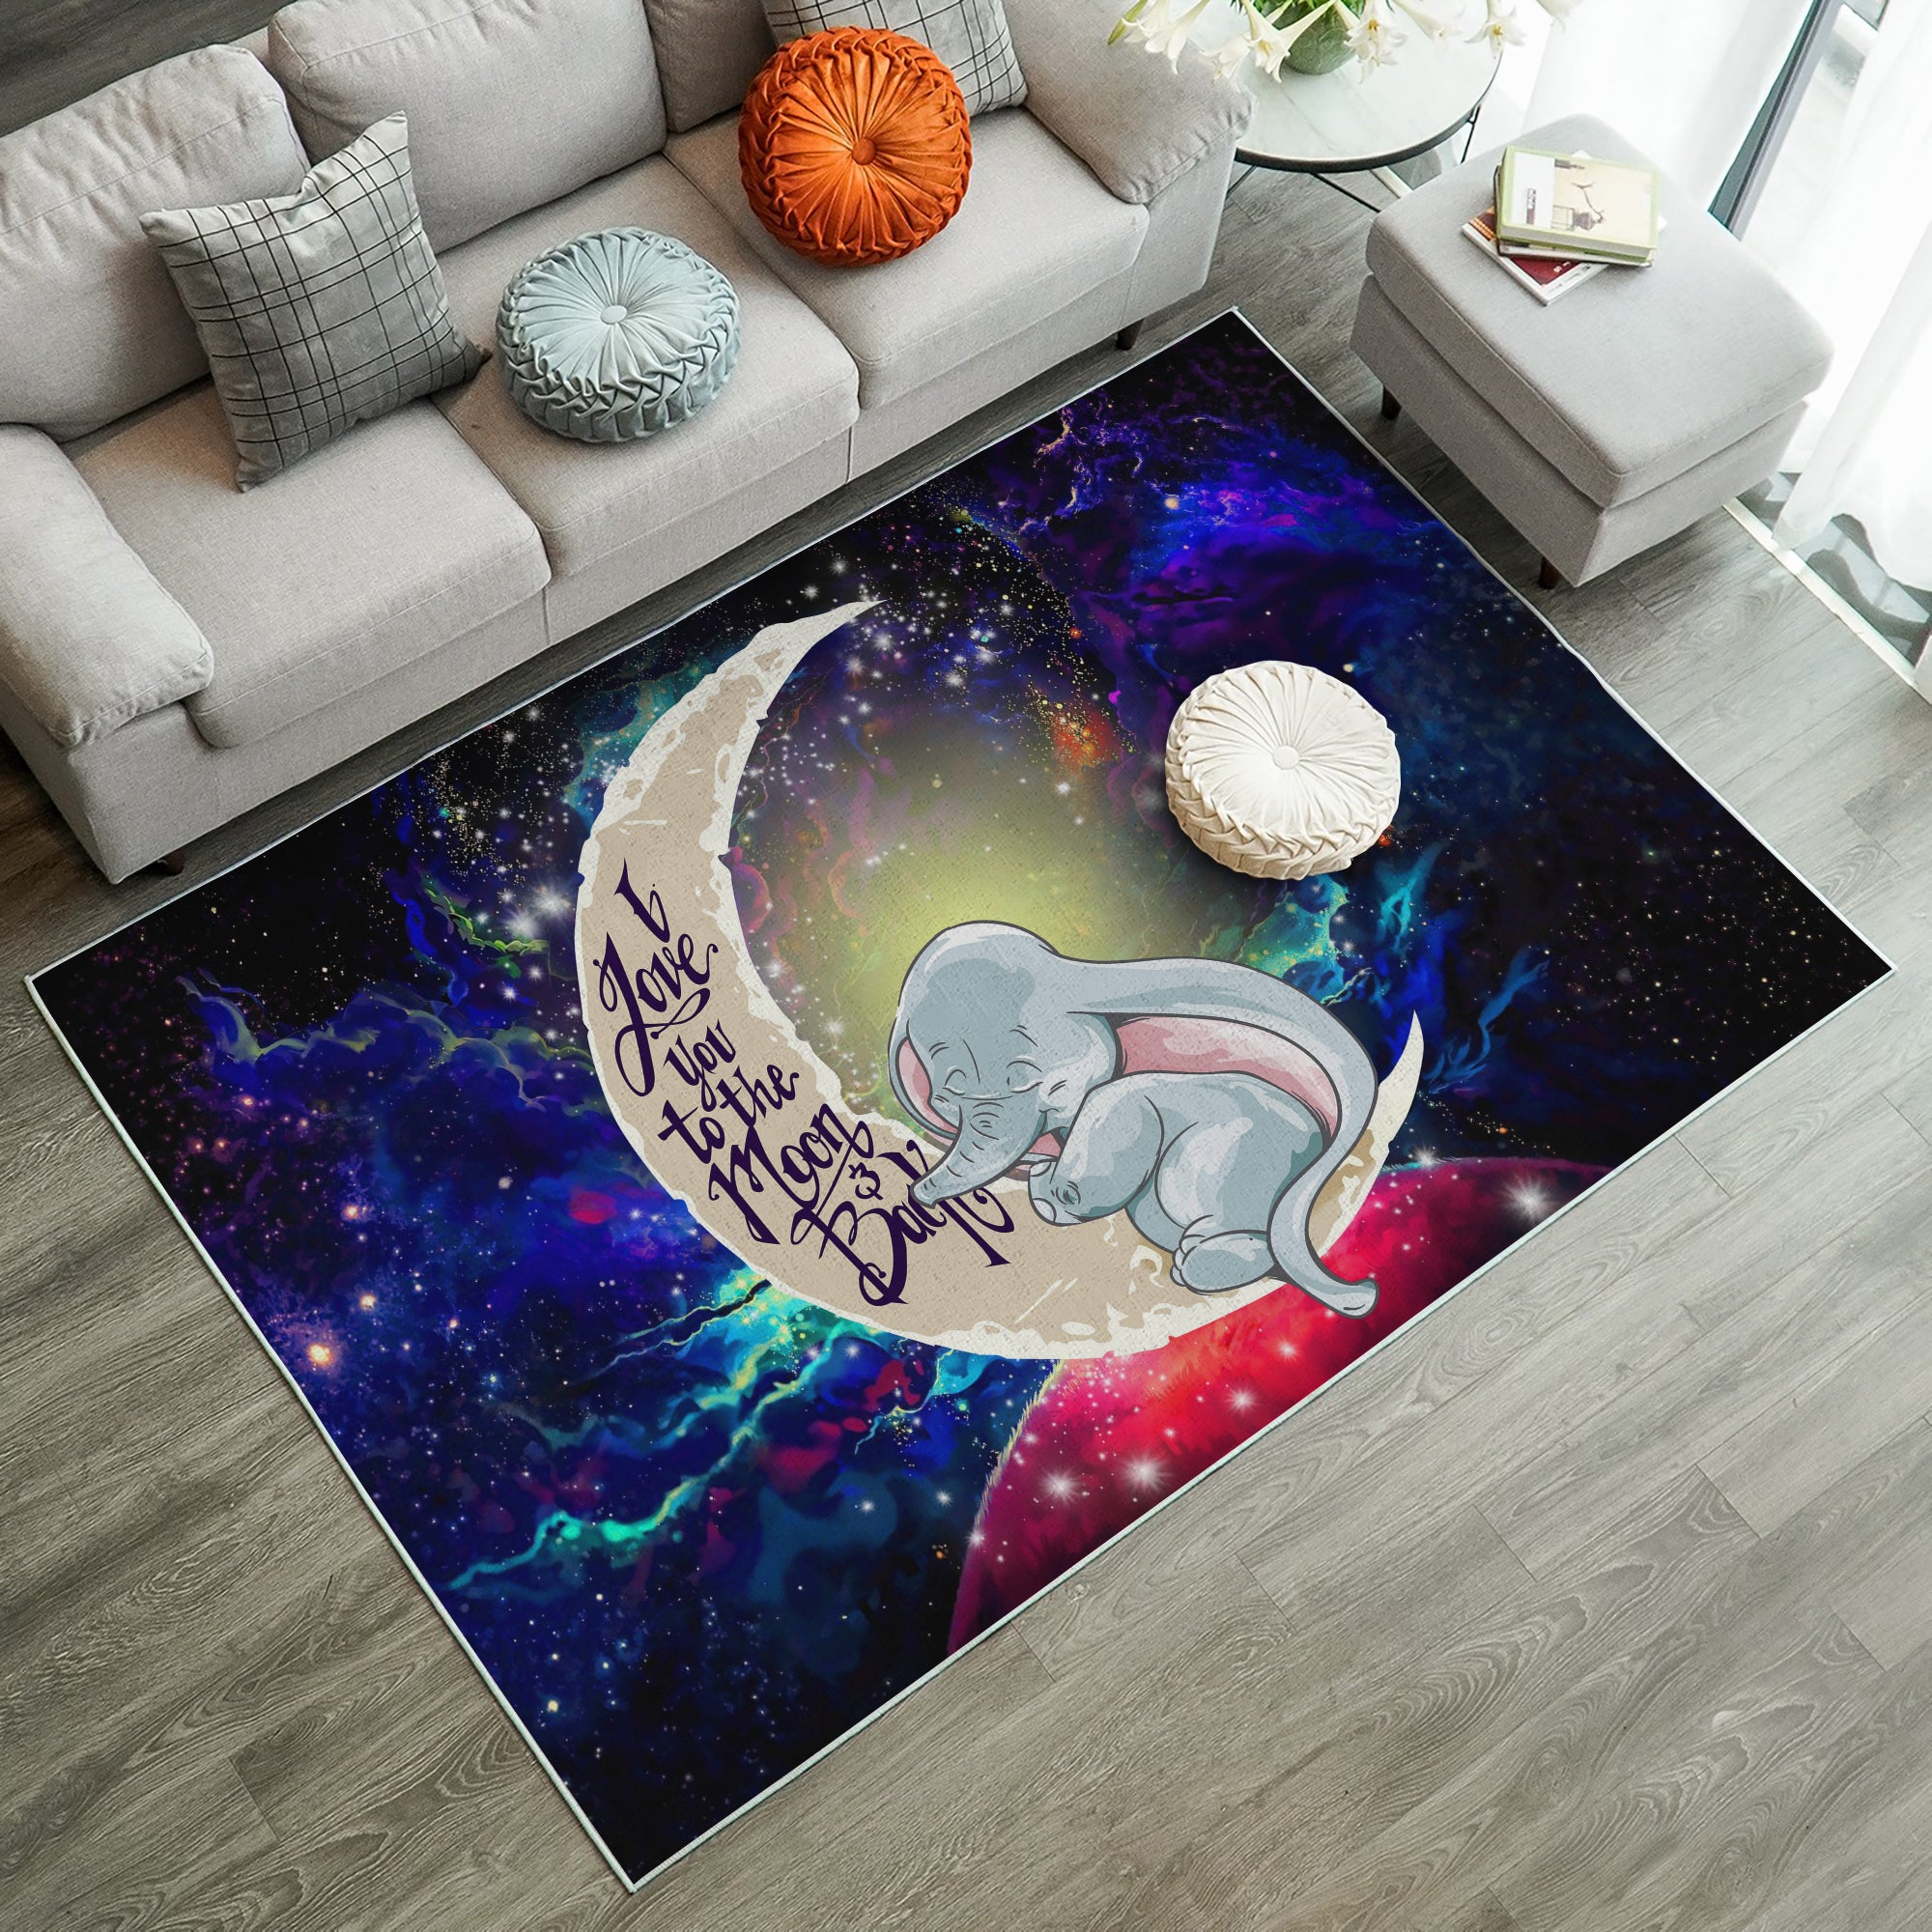 Dumbo Elephant Love You To The Moon Galaxy Carpet Rug Home Room Decor